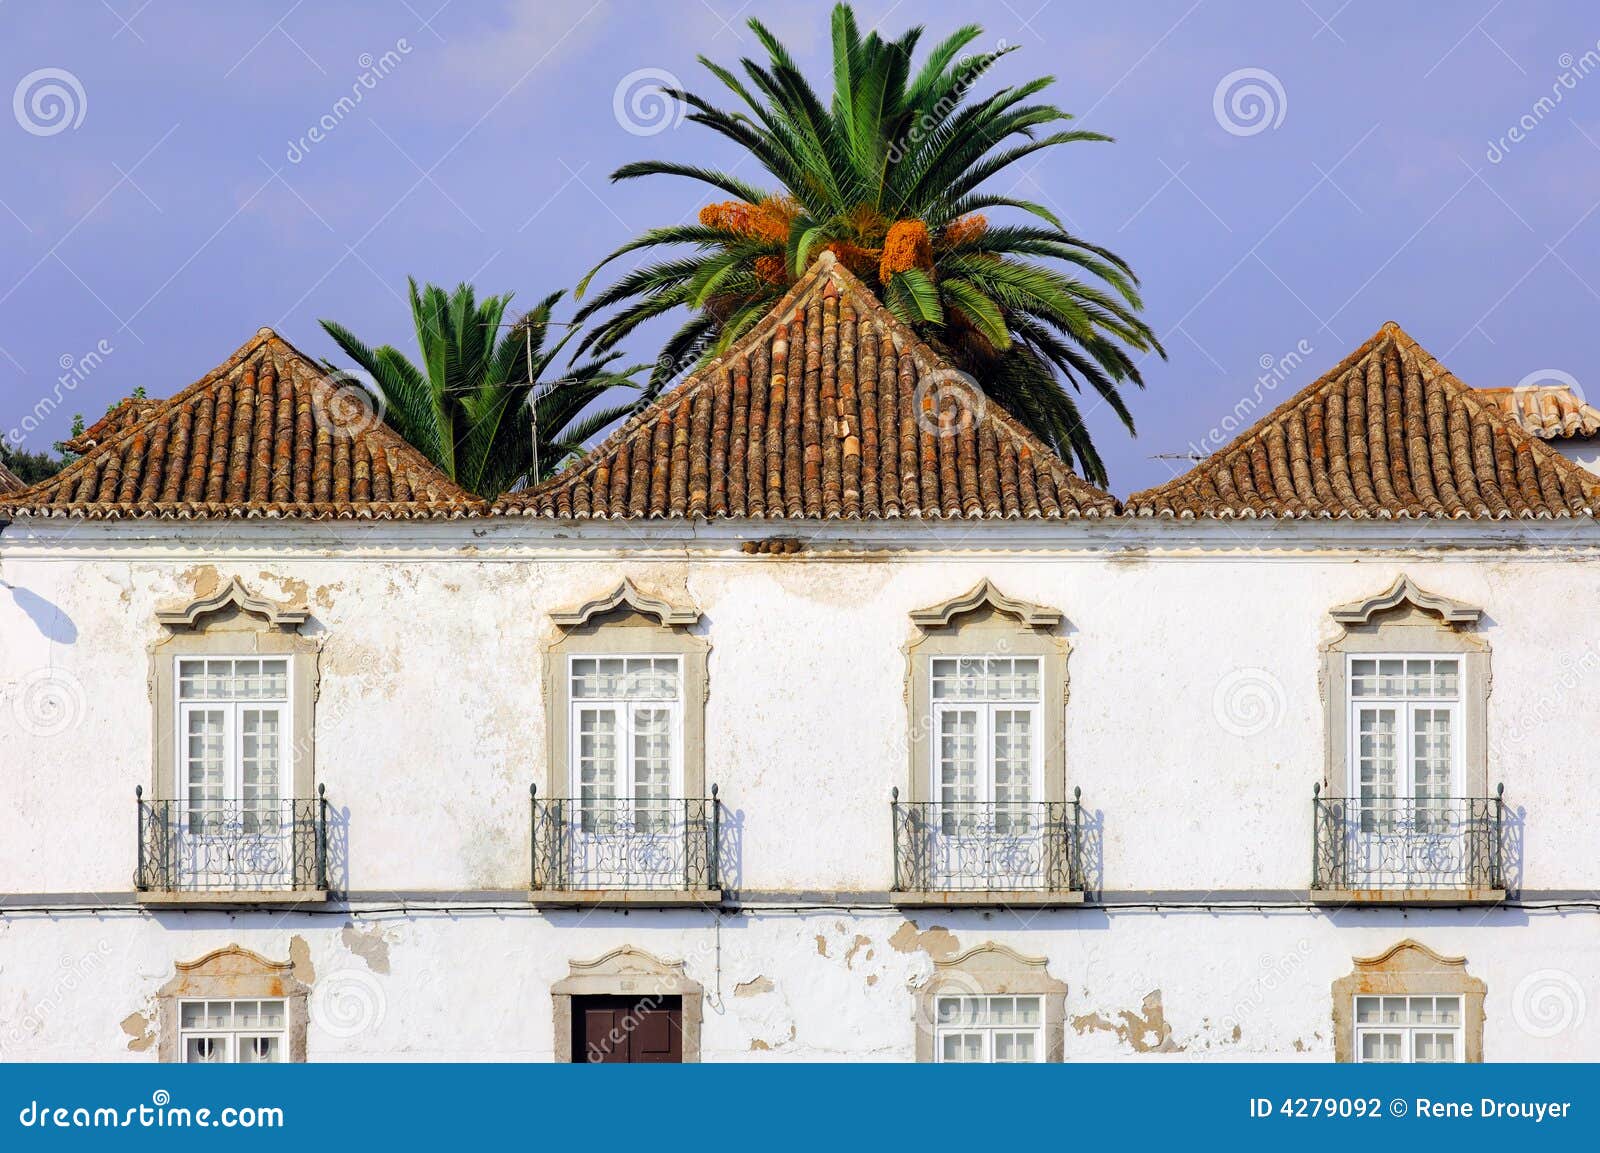 portugal, algarve, tavira: typical architecture